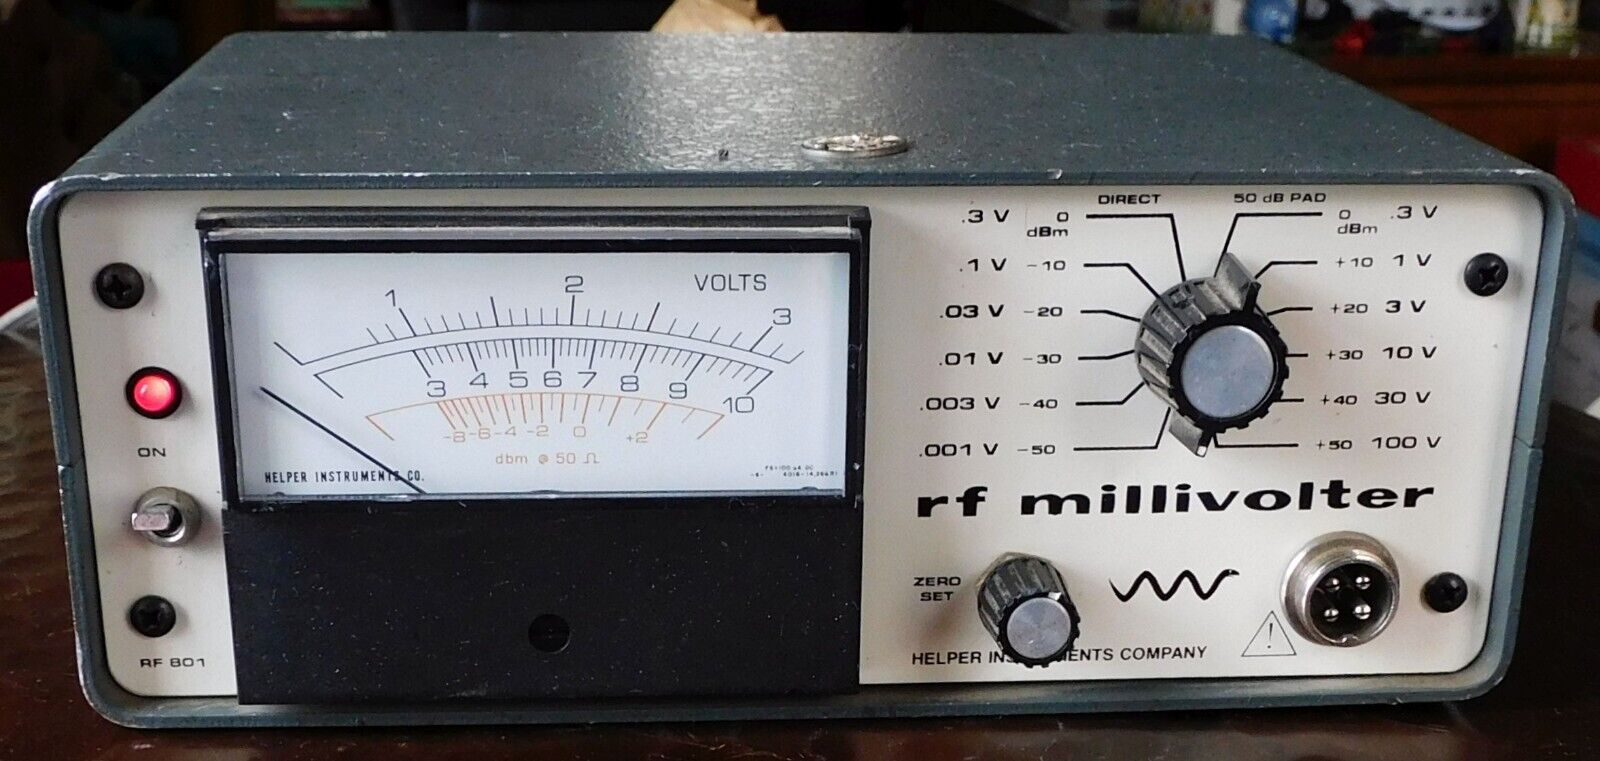 RF-801 Millivolter Helper Instruments Meter with Doc, Vintage